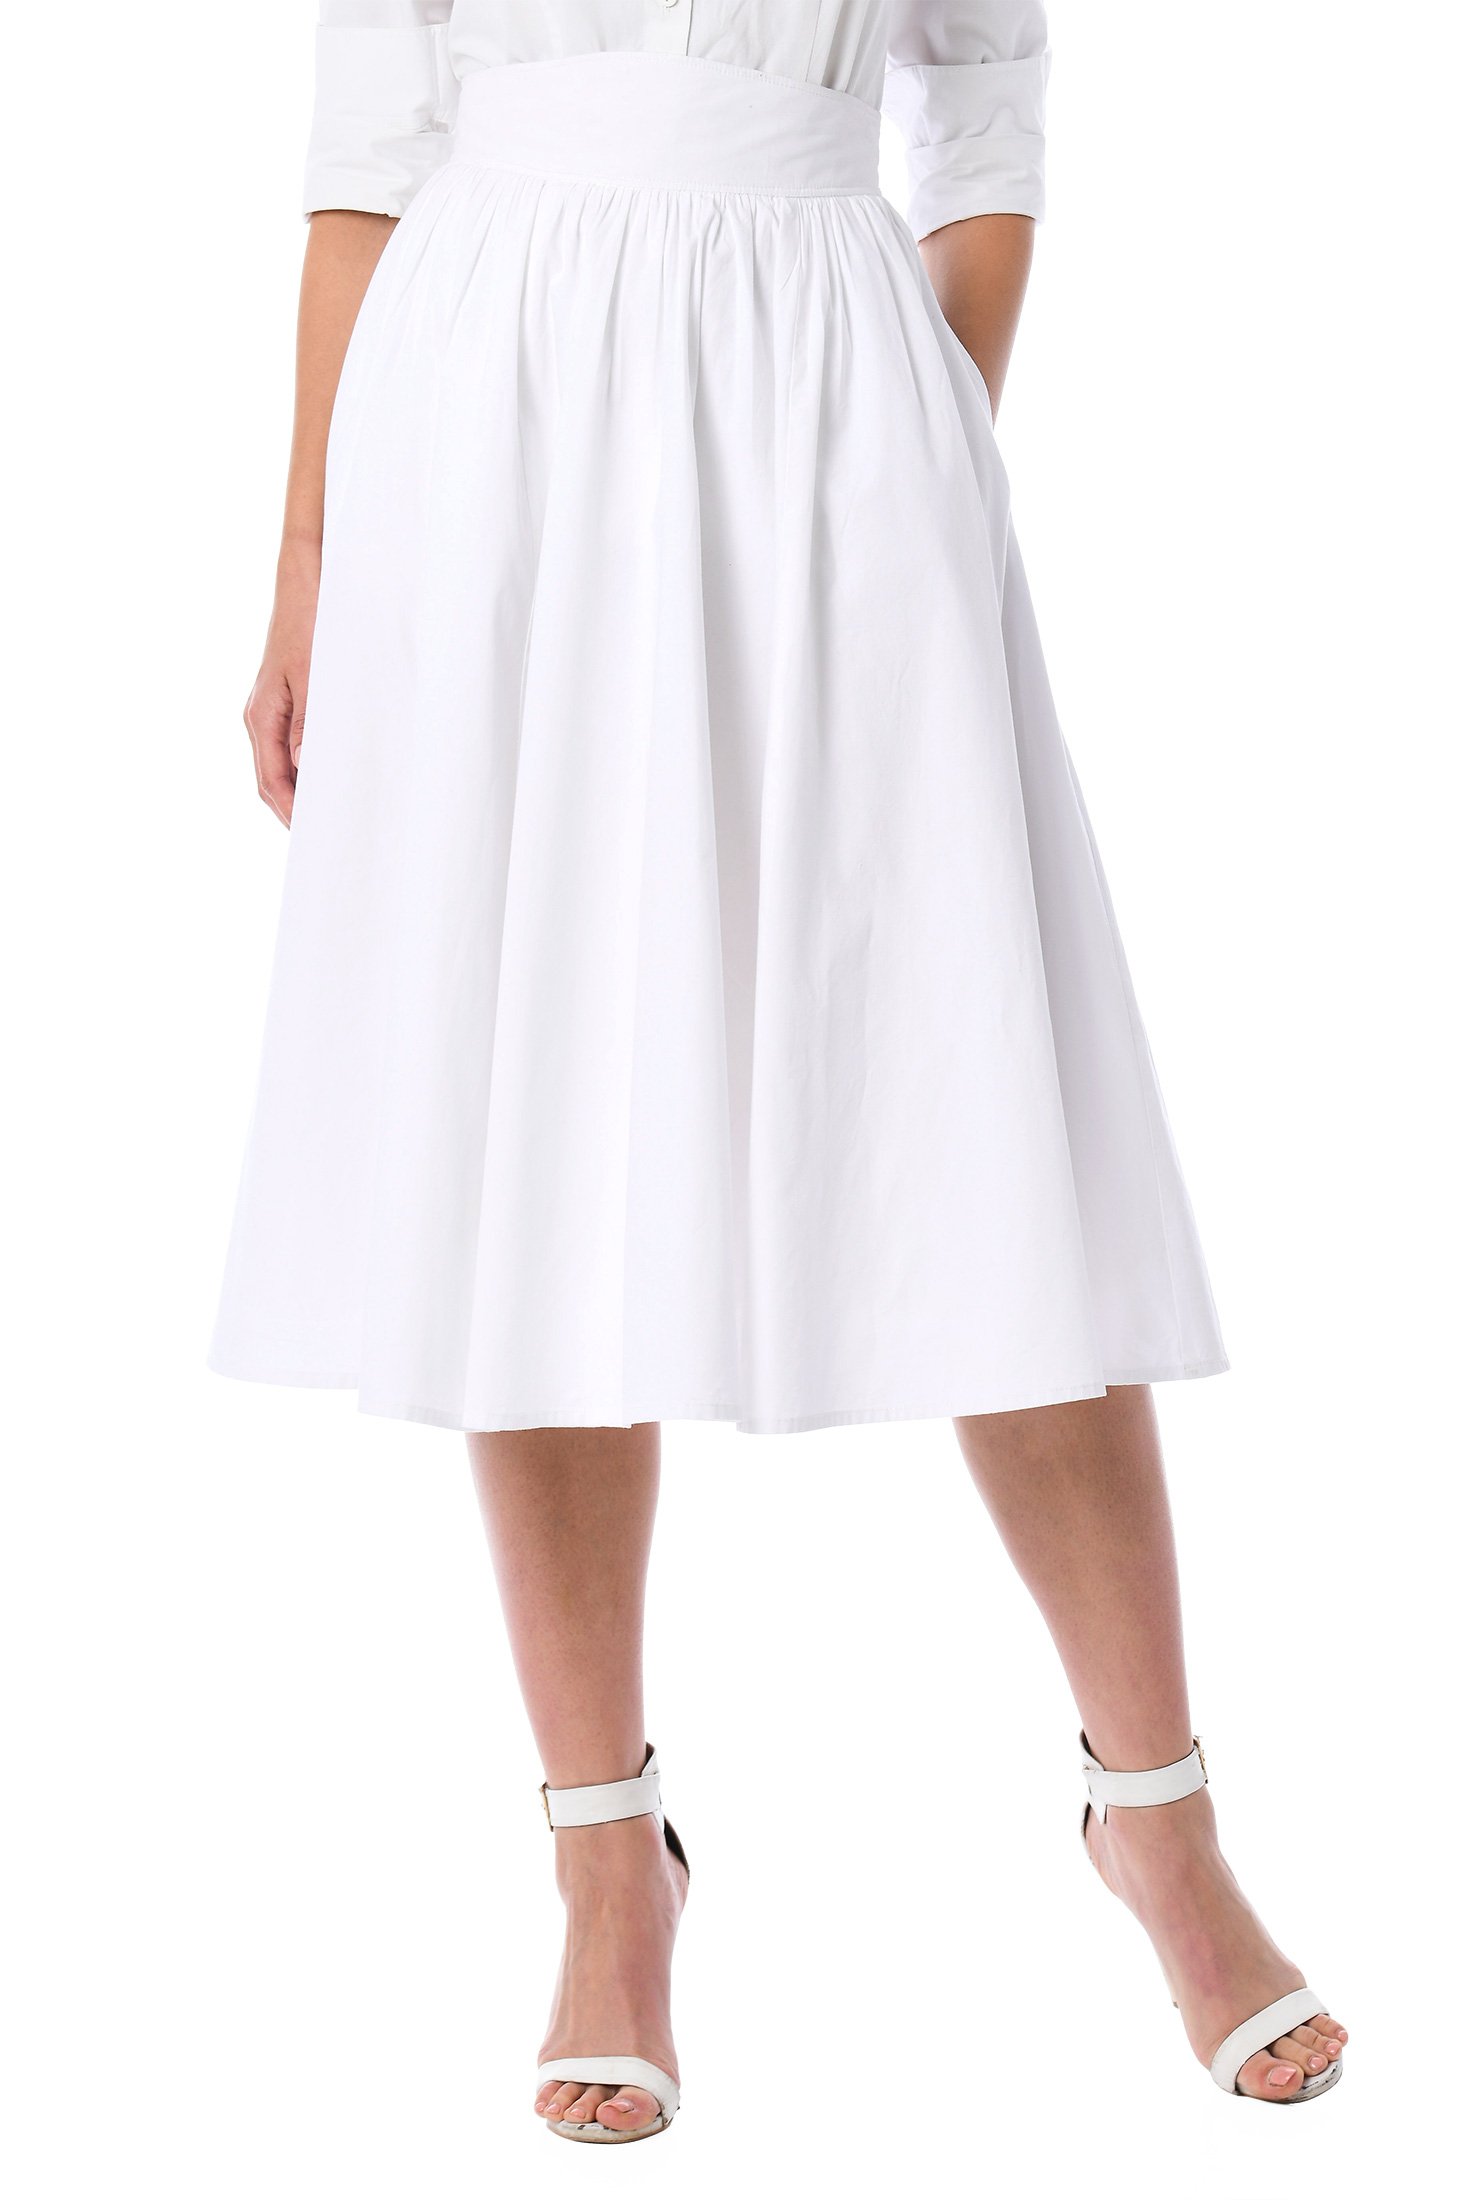 Shop White cotton poplin full skirt | eShakti